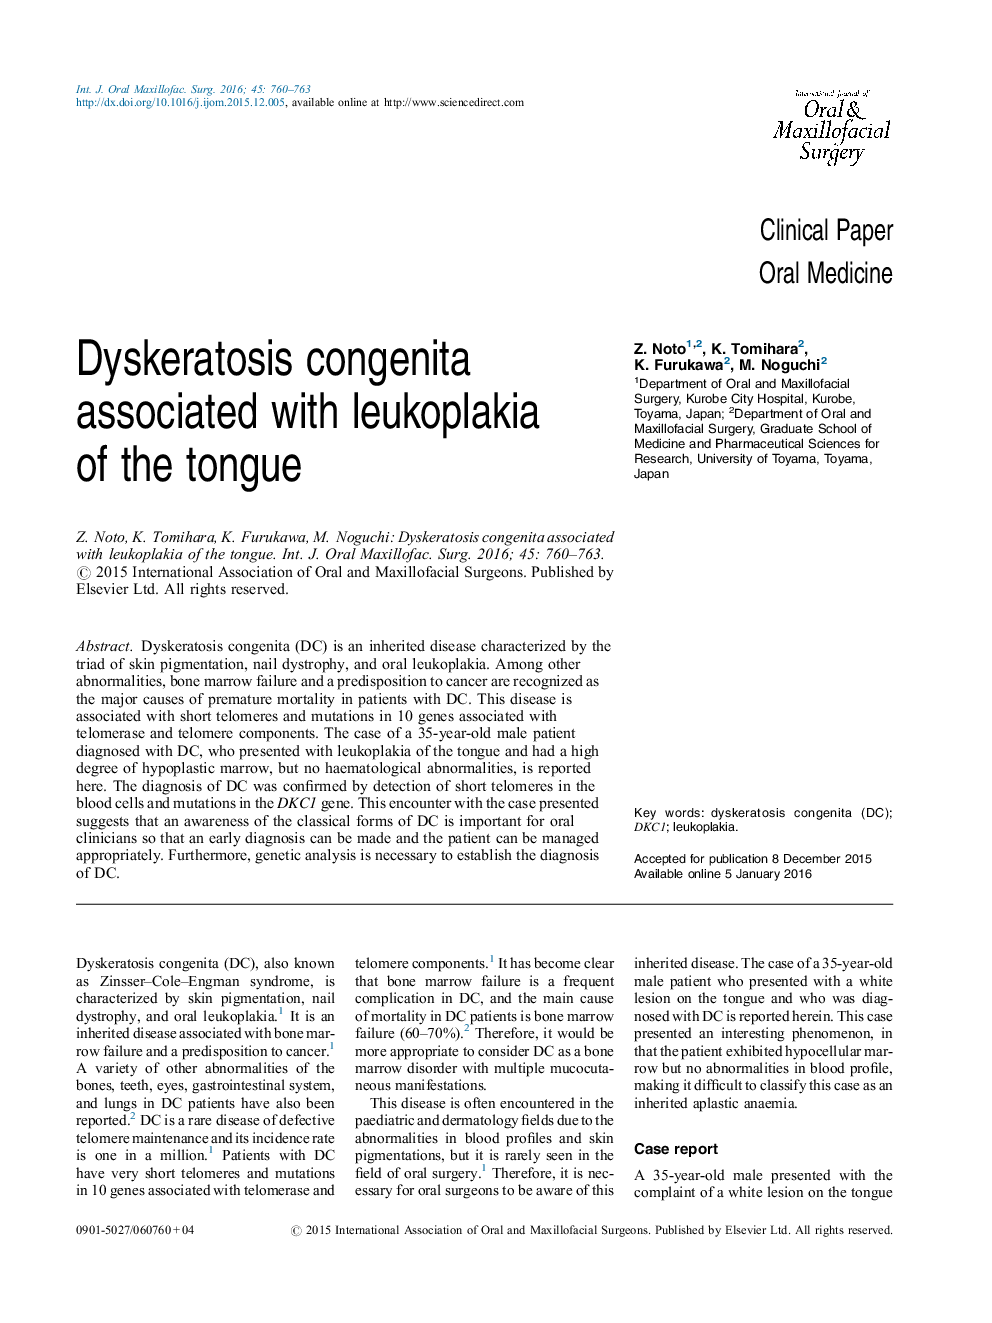 Dyskeratosis congenita associated with leukoplakia of the tongue